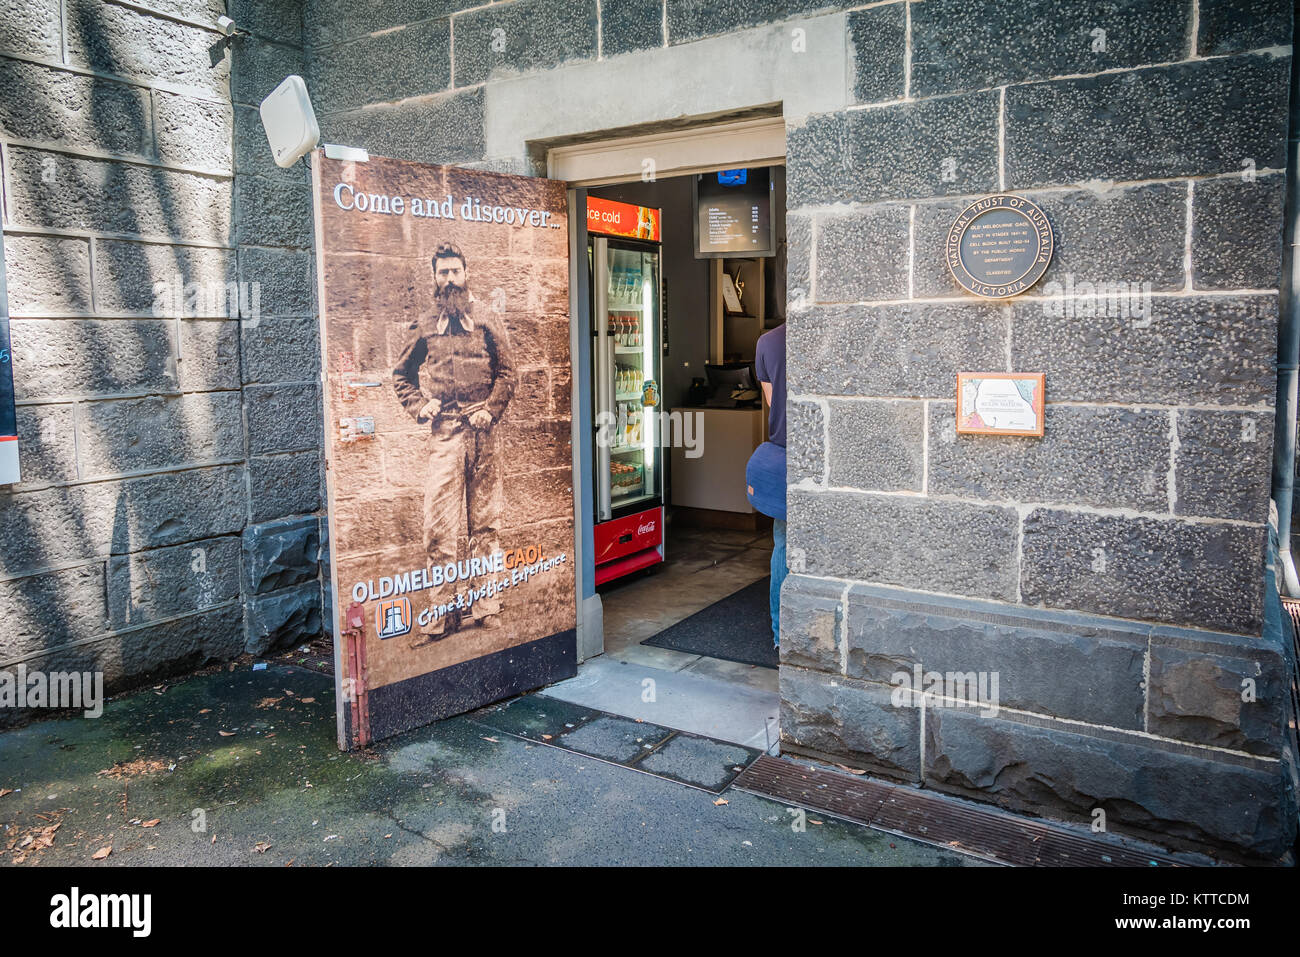 Old Melbourne Gaol jetzt ein Museum Stockfoto